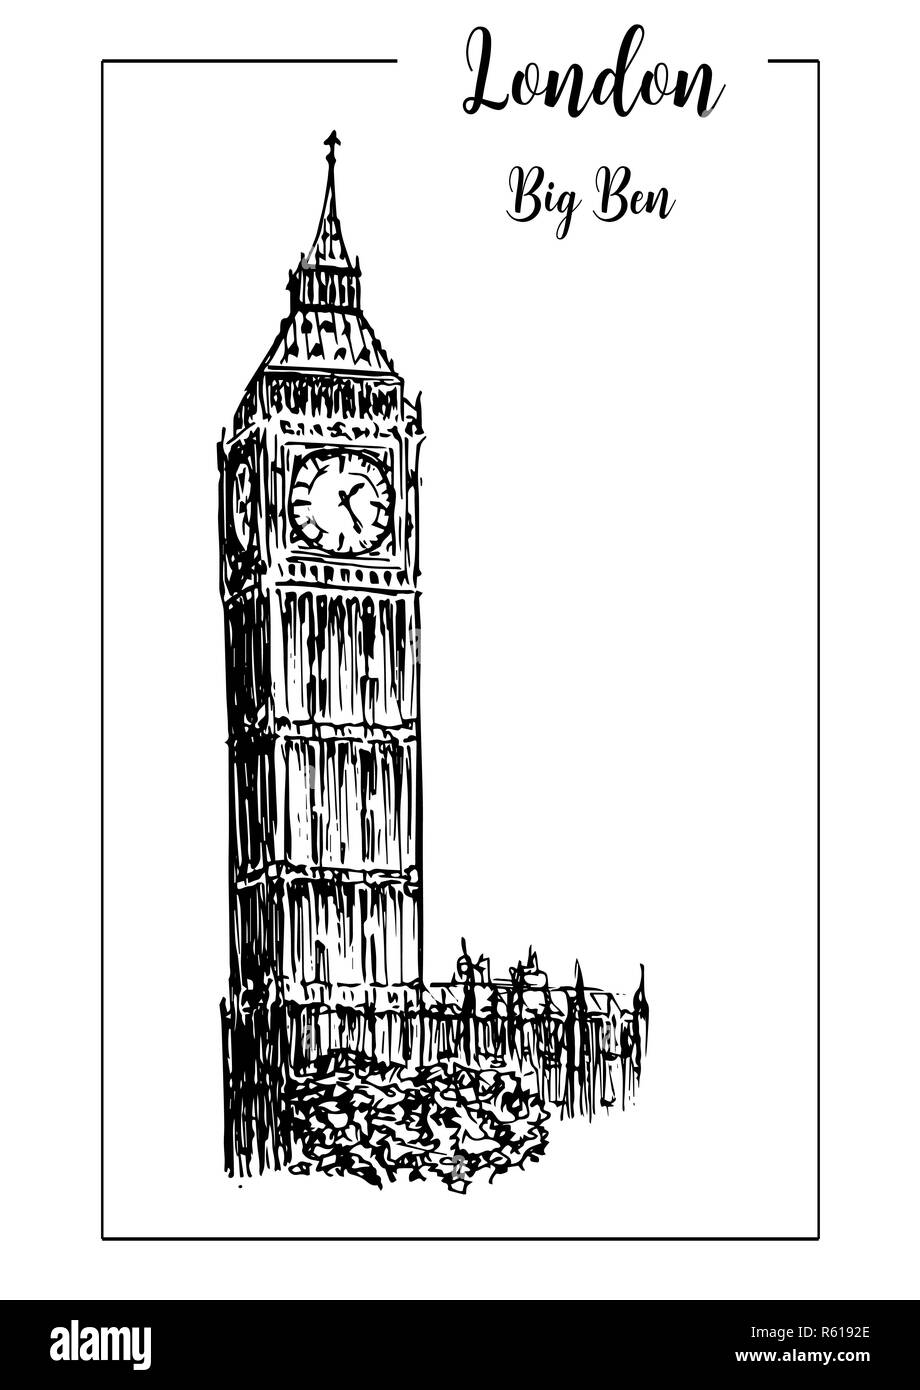 Big Ben or clock tower. London symbol. Beautiful hand drawn vector sketch illustration. Stock Photo